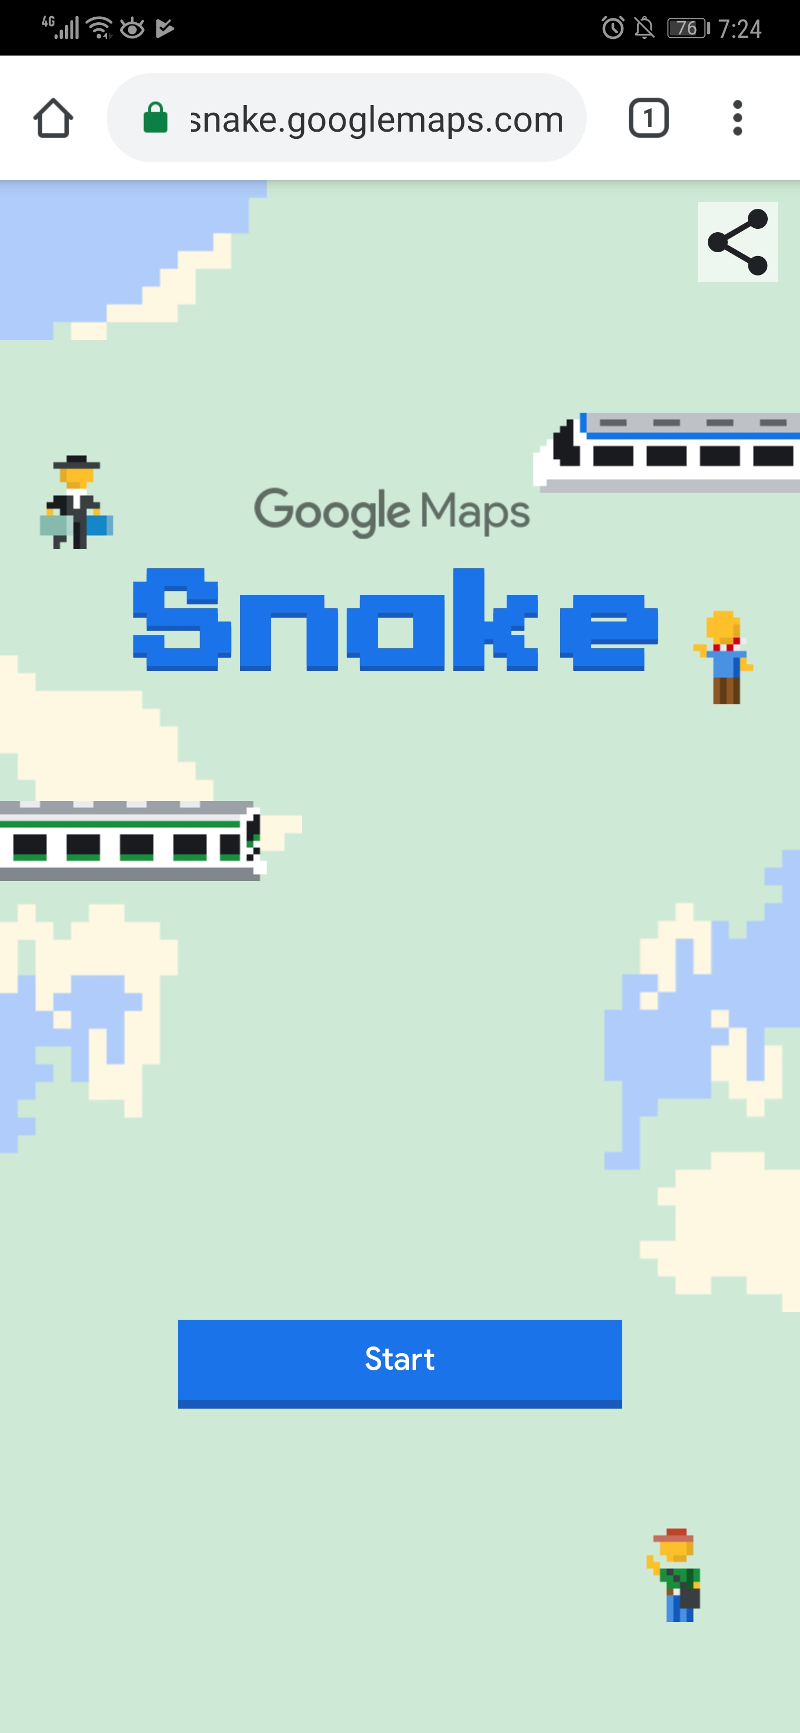 The splash screen in Google Maps Snake.